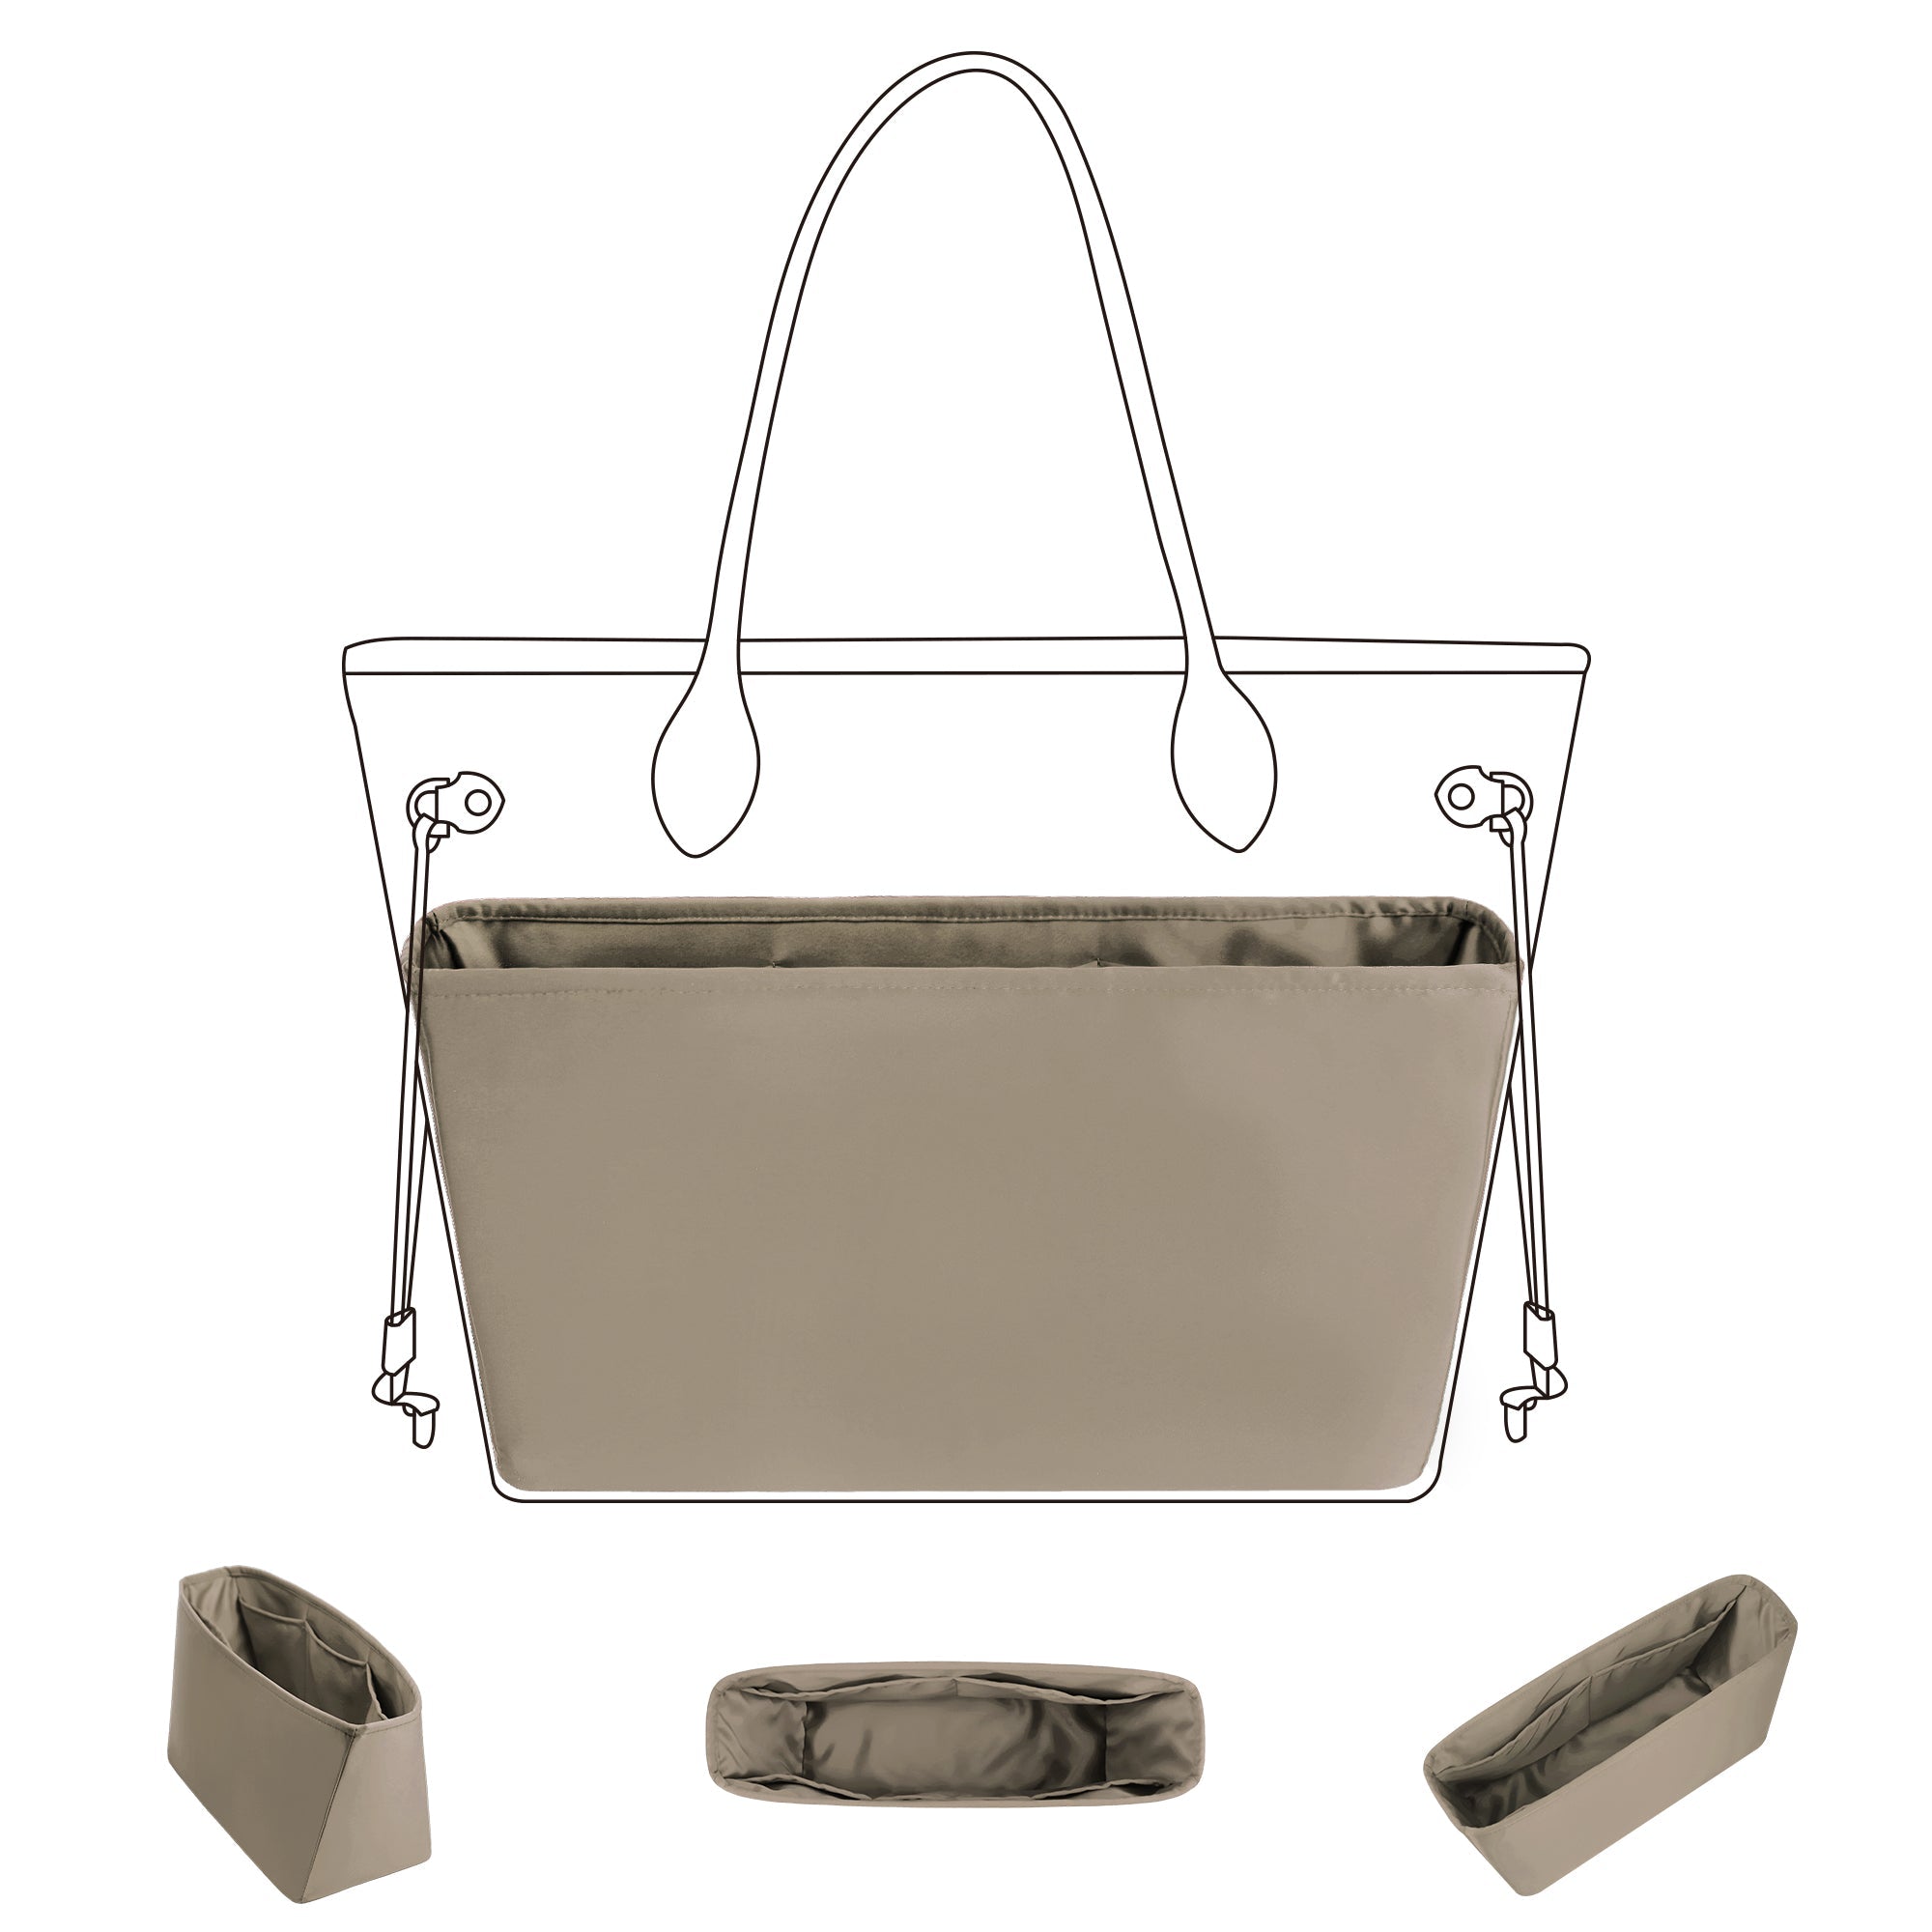 Baginbag | Purse Organizer Insert | Fits LV Neverfull Mini/PM/MM/GM Bags | Silk Bag Organizer | Luxury Handbag & Tote Shaper | handbag organizer